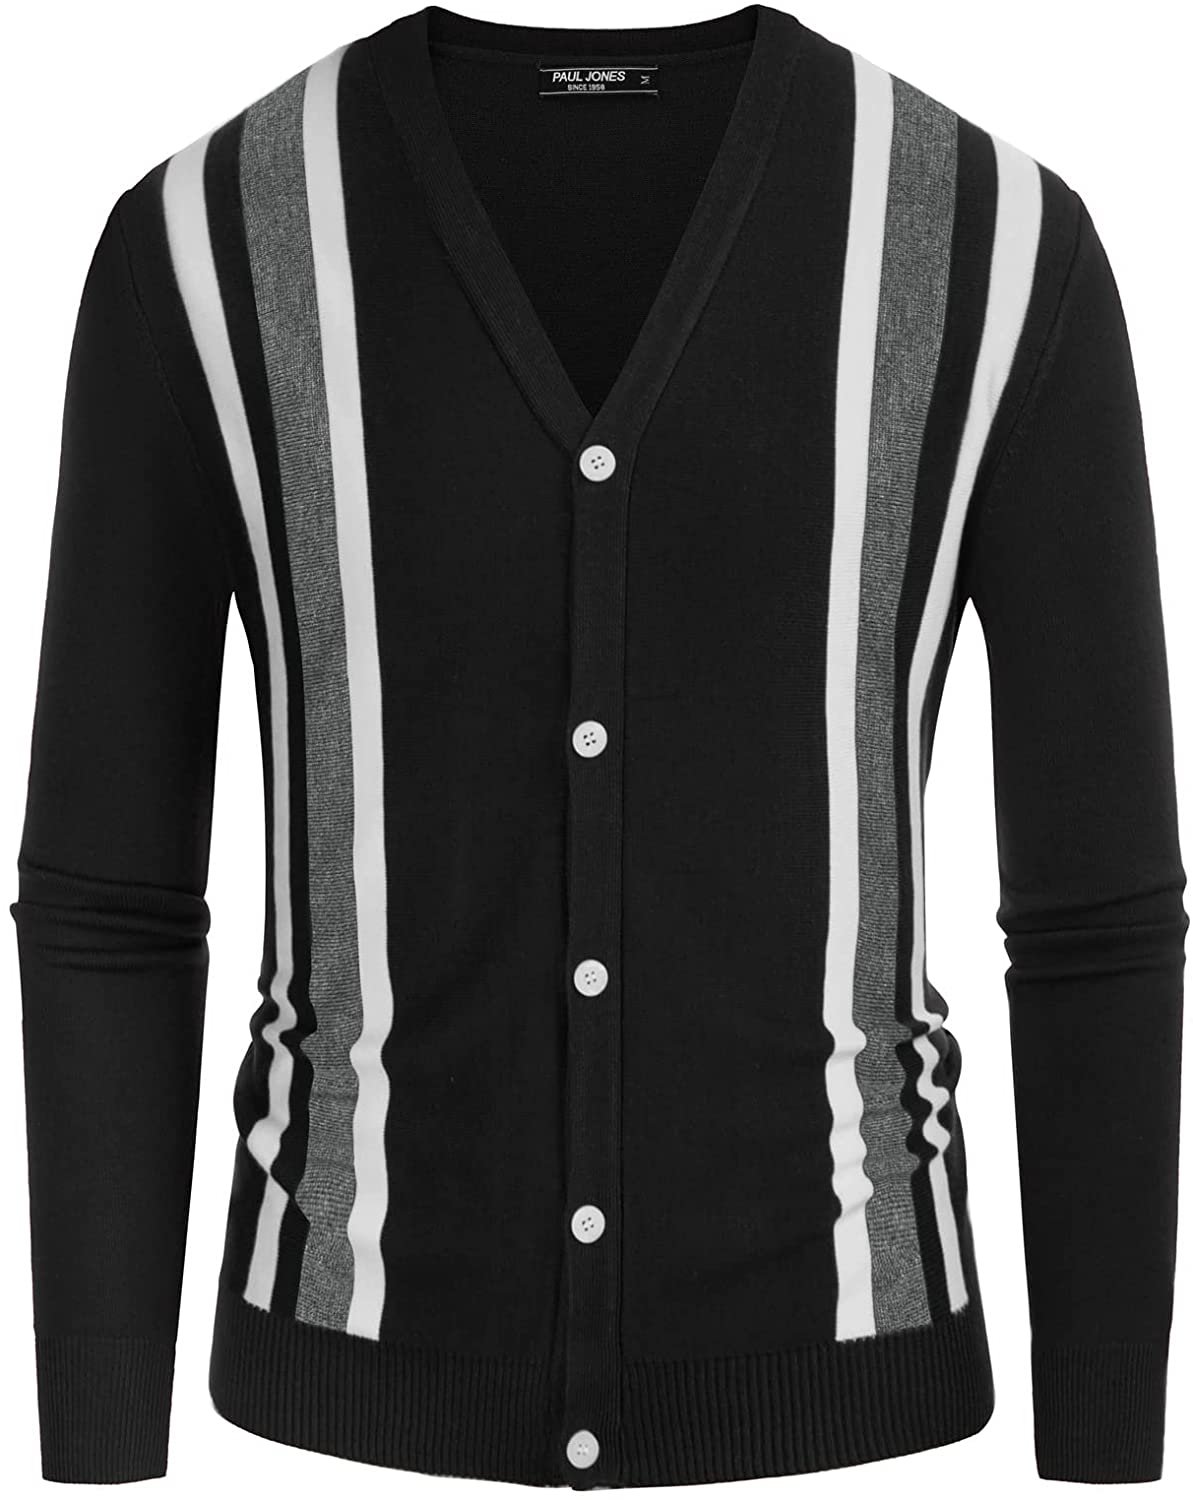 PJ PAUL JONES Mens Vintage Stripes Cardigan Sweater Button Down V-Neck Knitwear 